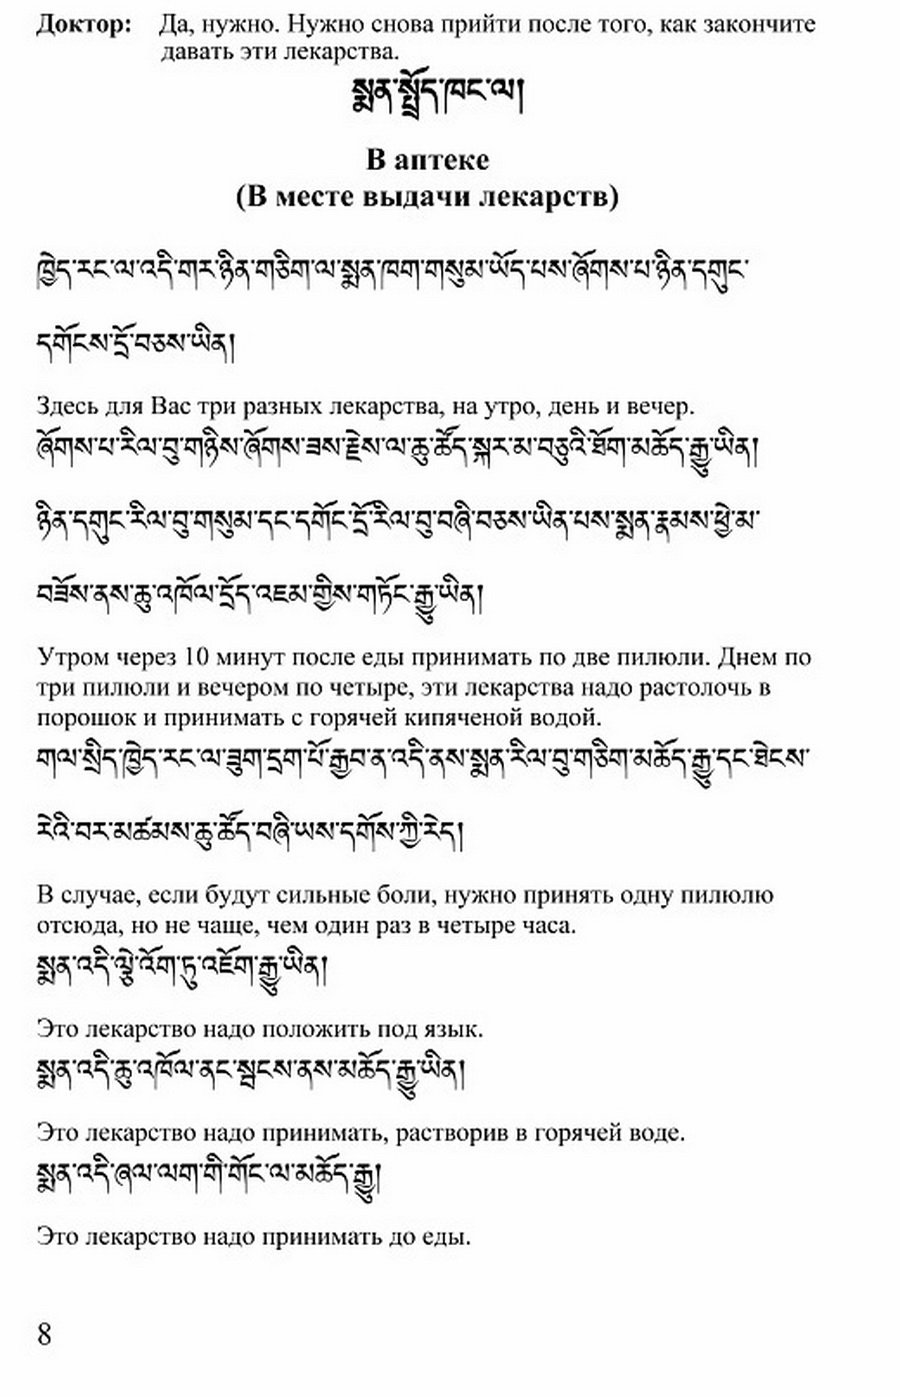 "Тибетский язык на приеме у врача" 